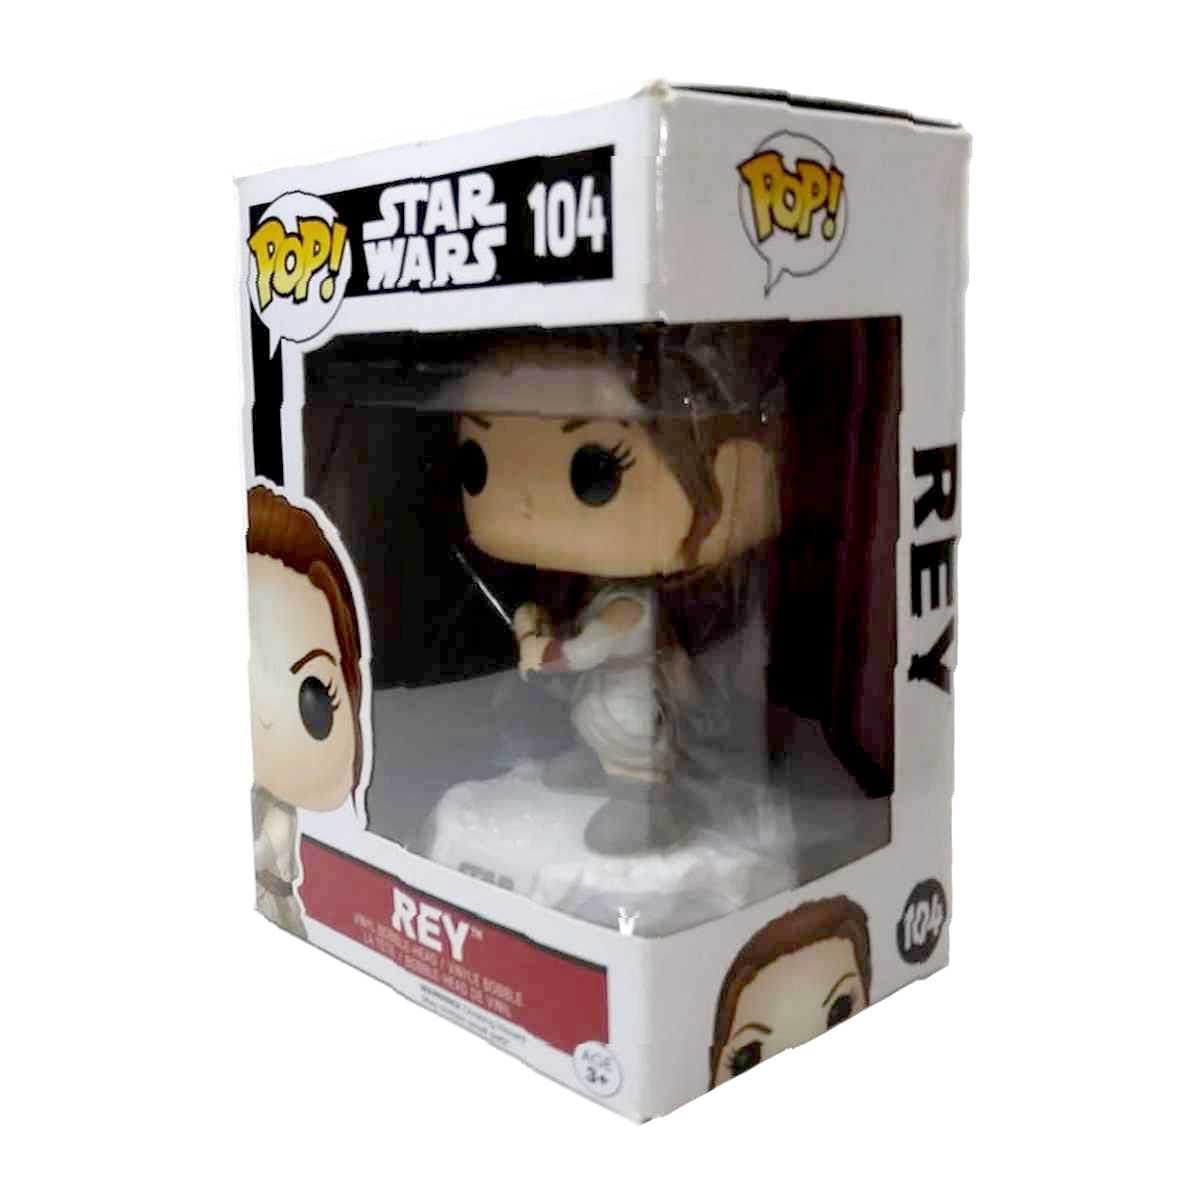 Funko Pop! Movies Star Wars Rey with lightsaber vinyl figure número 104